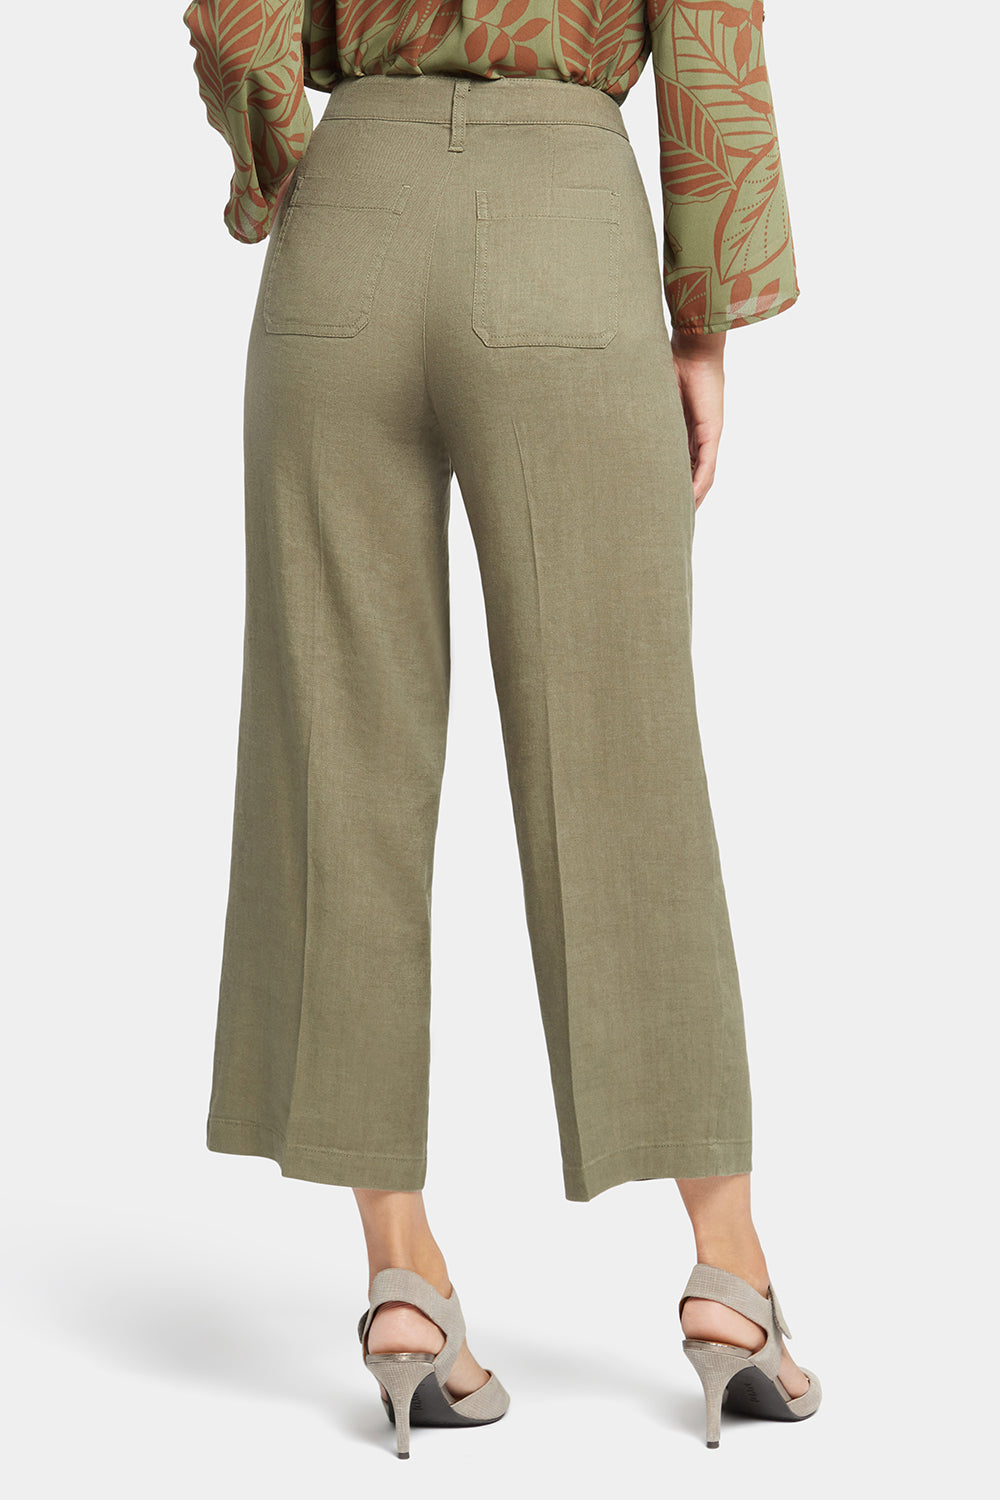 RYRJJ Women's Linen High Waist Pants Drawstring Cargo Capris Pants with 4  Pockets Casual Wide Leg Workour Yoga Cropped Pants(Navy,XXL)